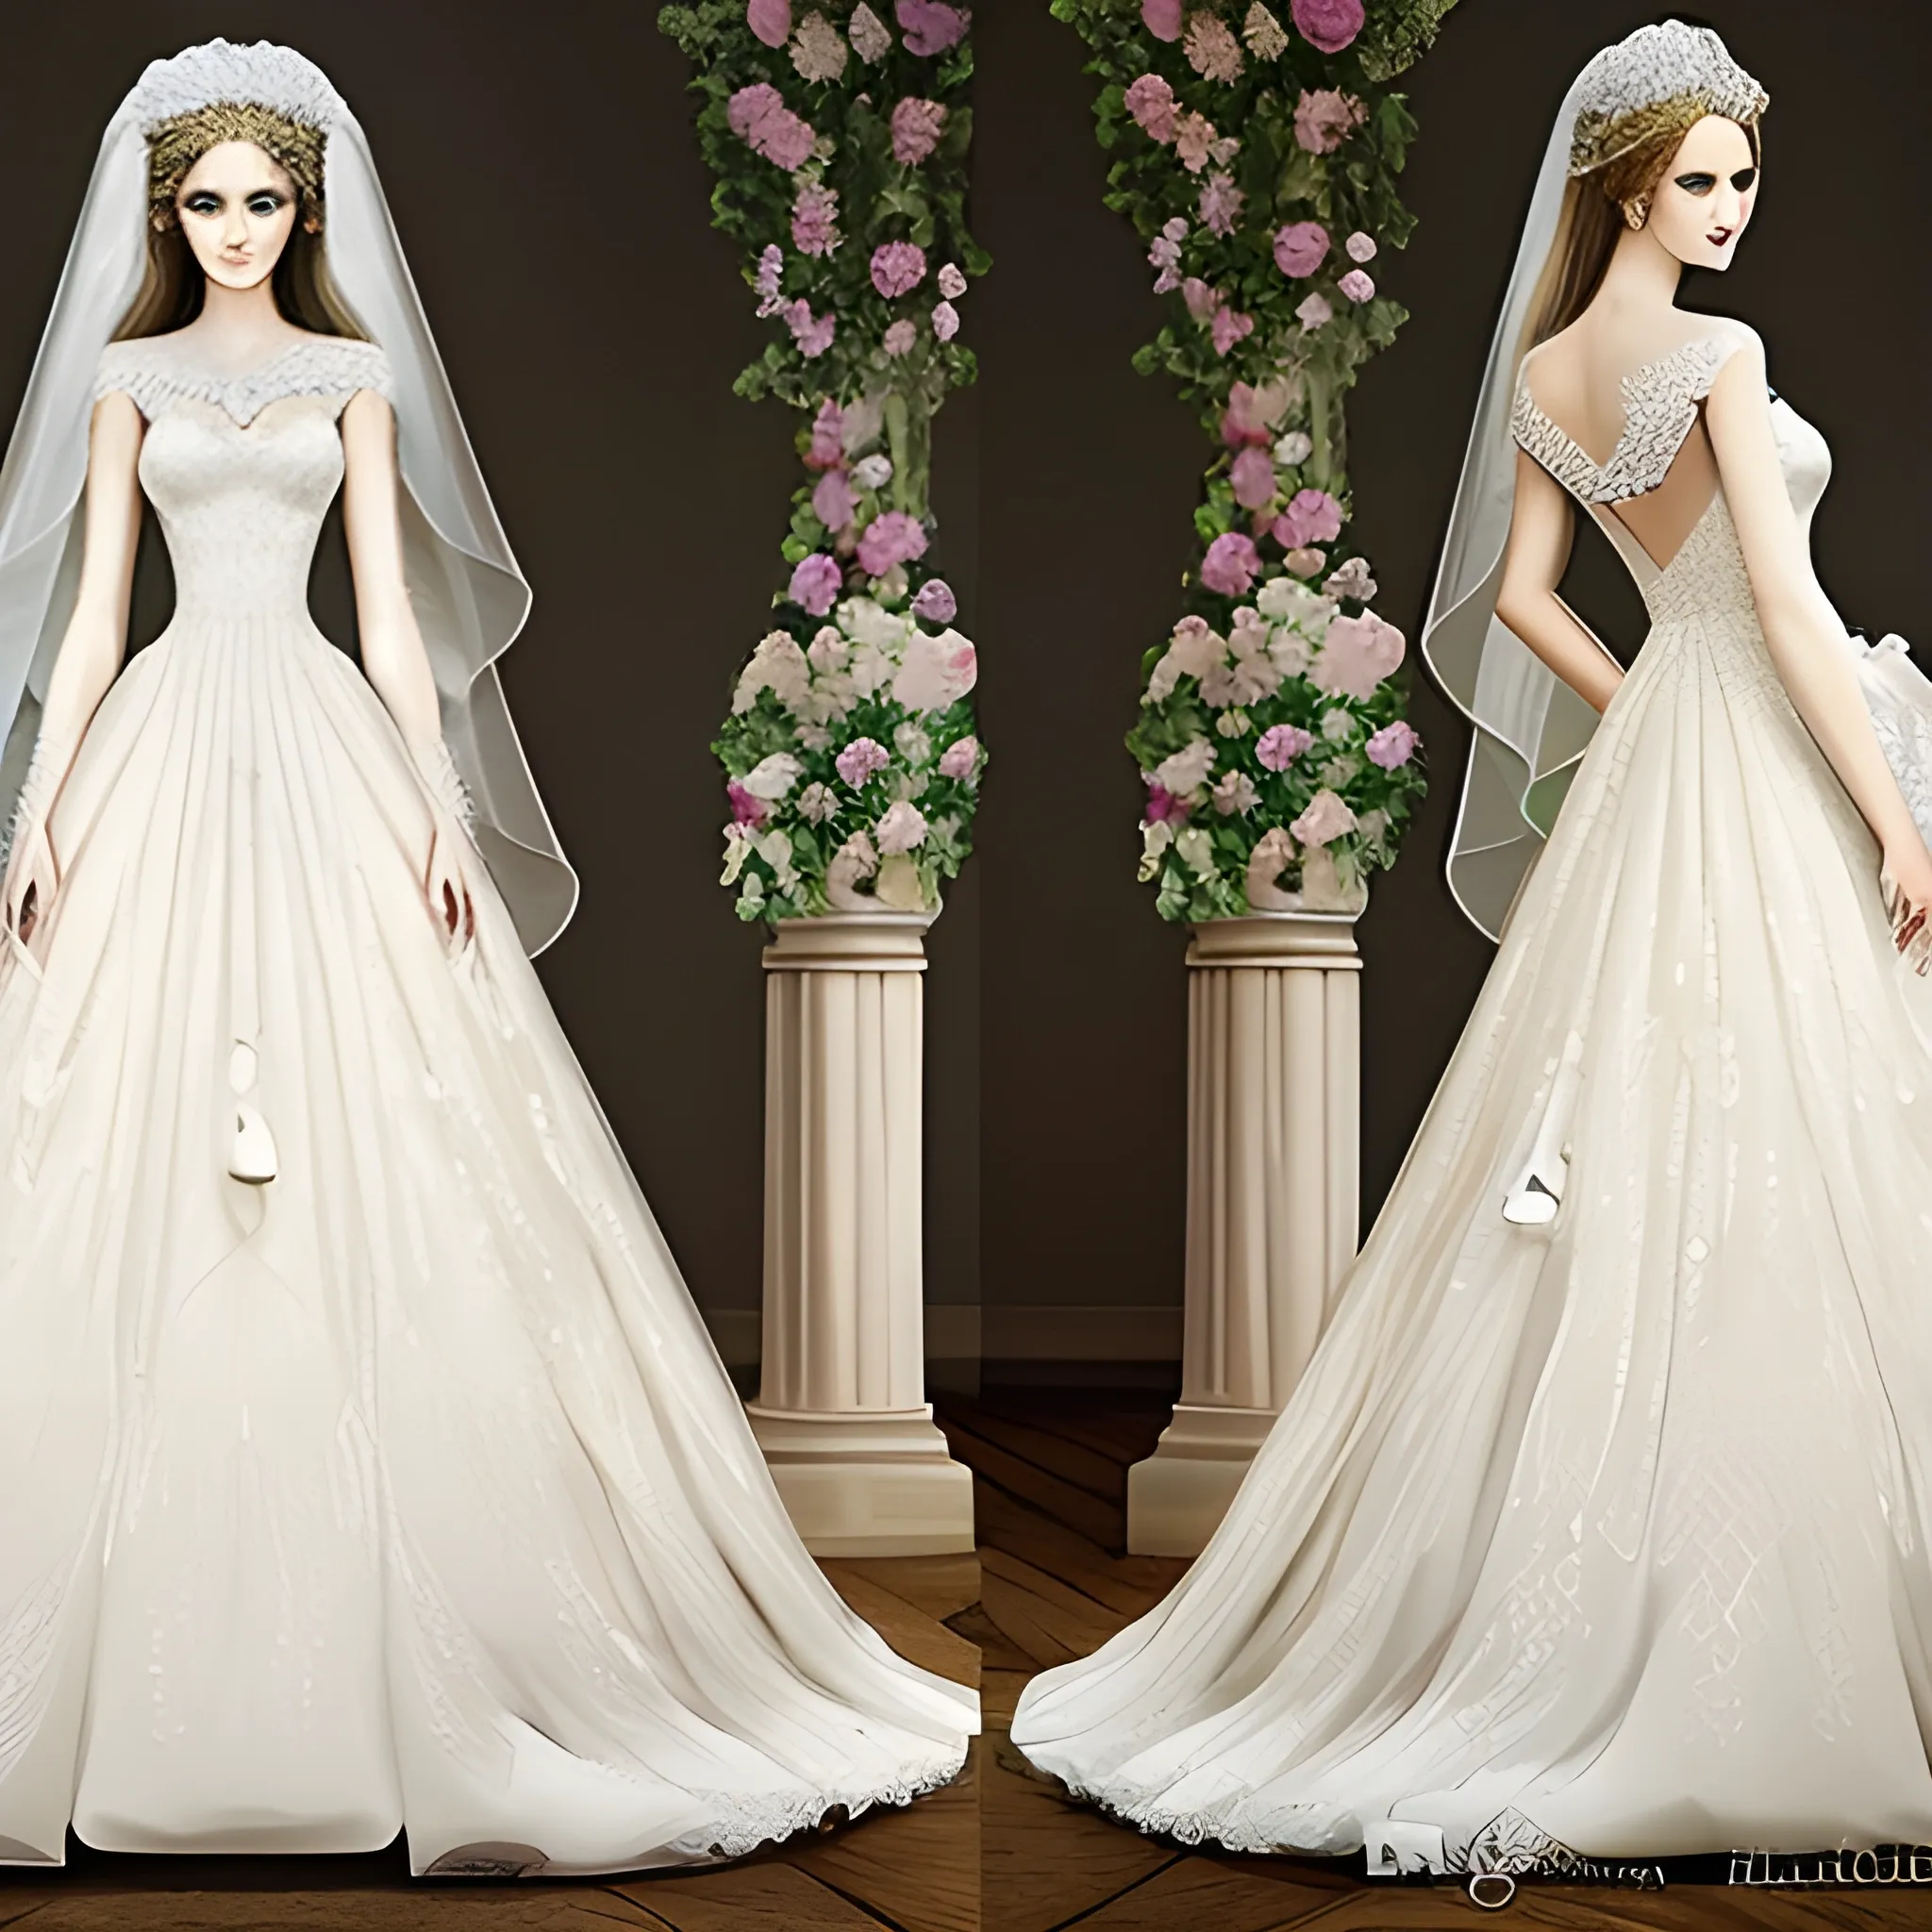 Ethereal goddess wedding dress majestic realistic extravagant de ...